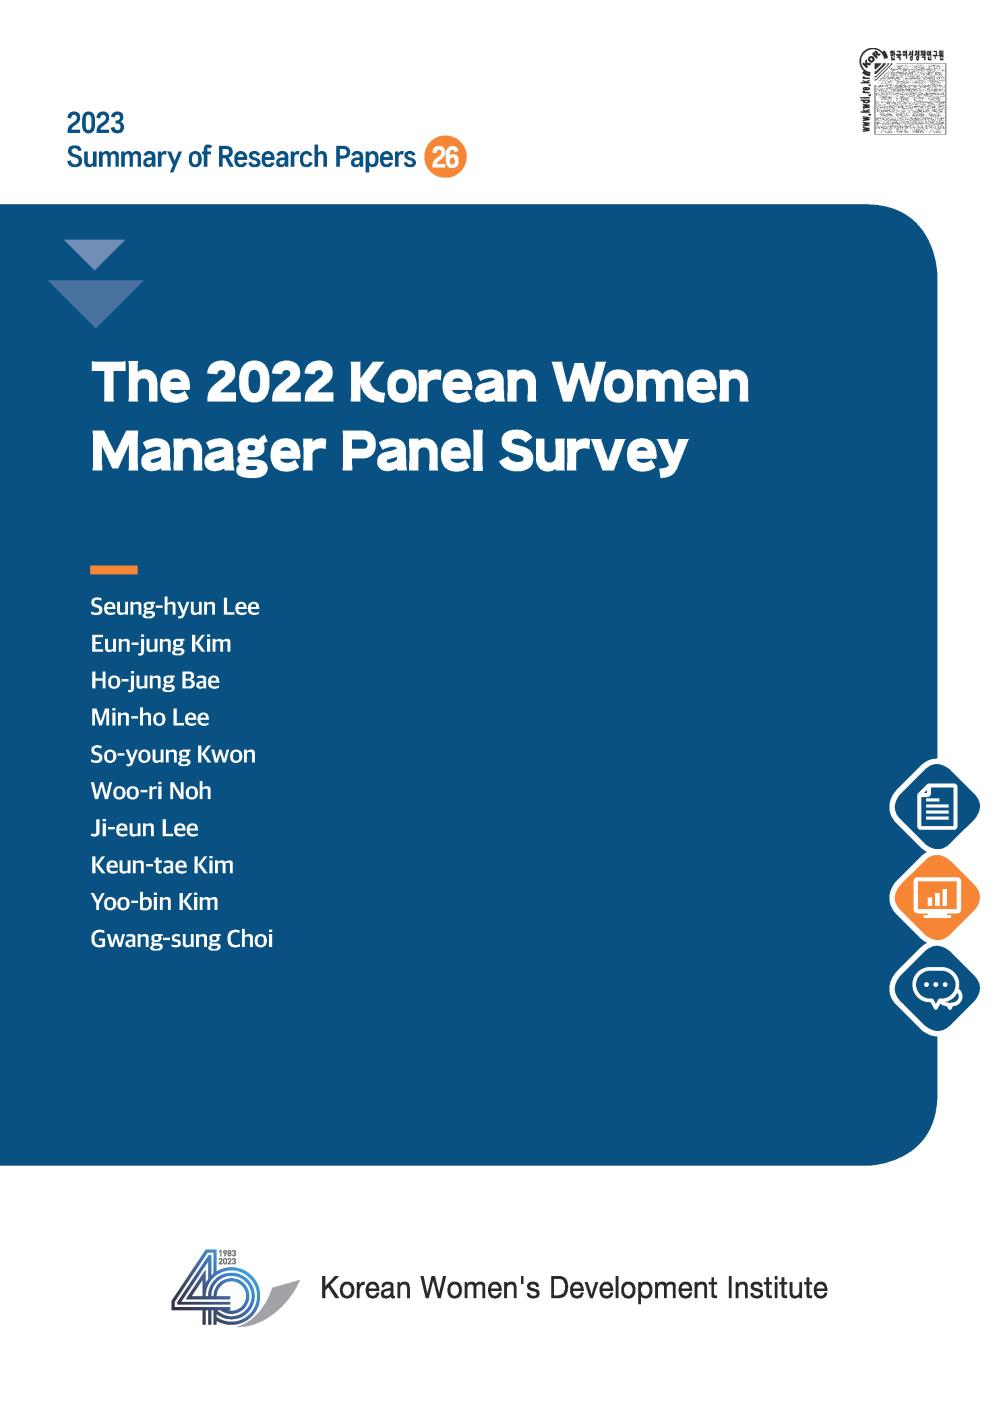 The 2022 Korean Women Manager Panel Survey